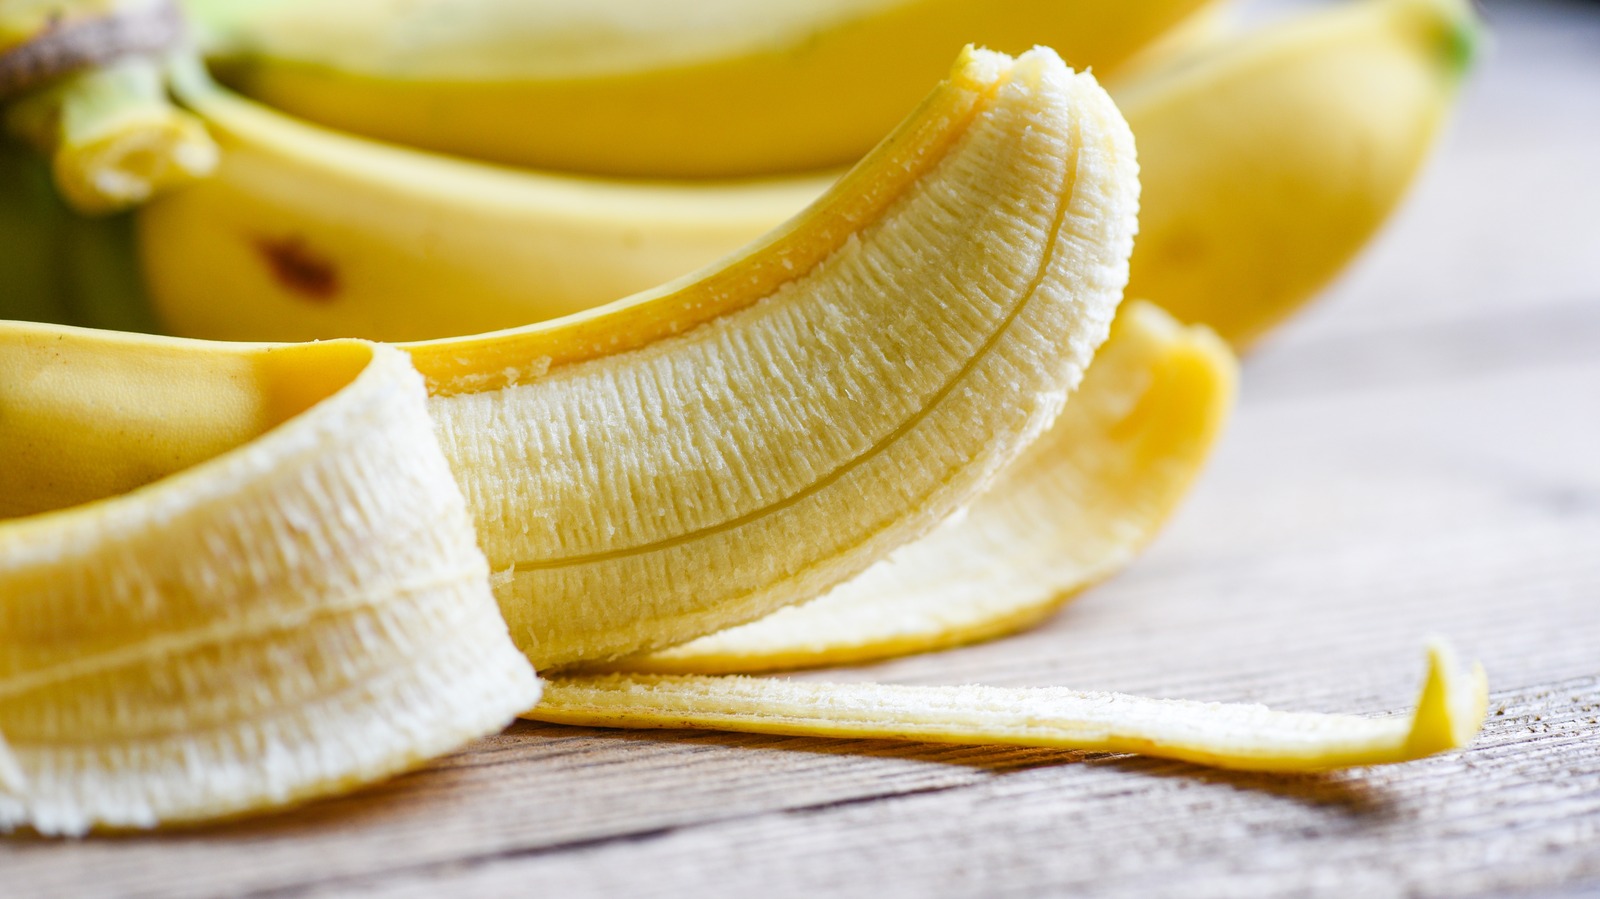 Are Trader Joe's 19 cent plain bananas really cheap?